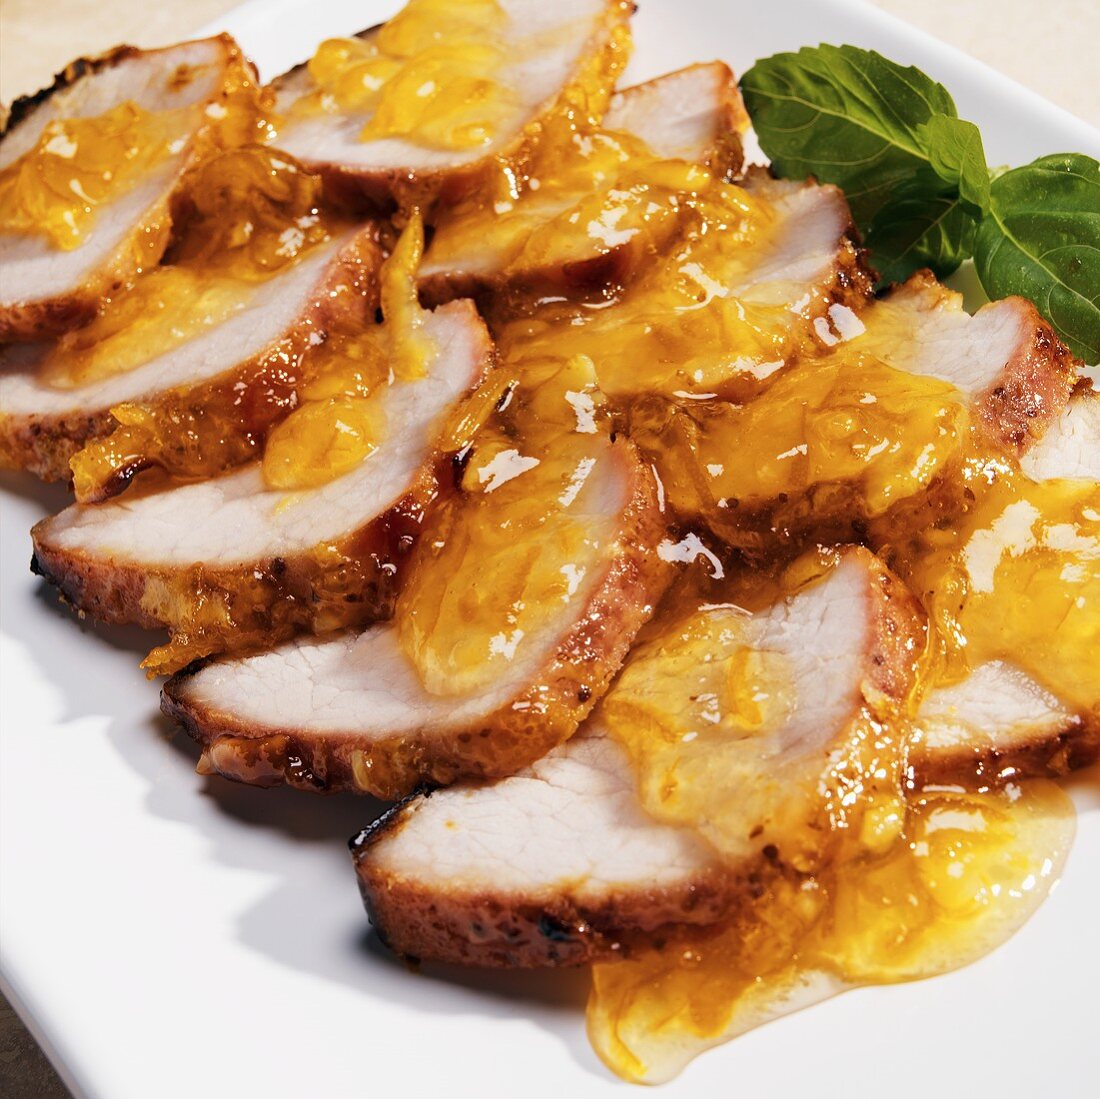 Sliced Roast Pork Loin with Orange Glaze on a Platter